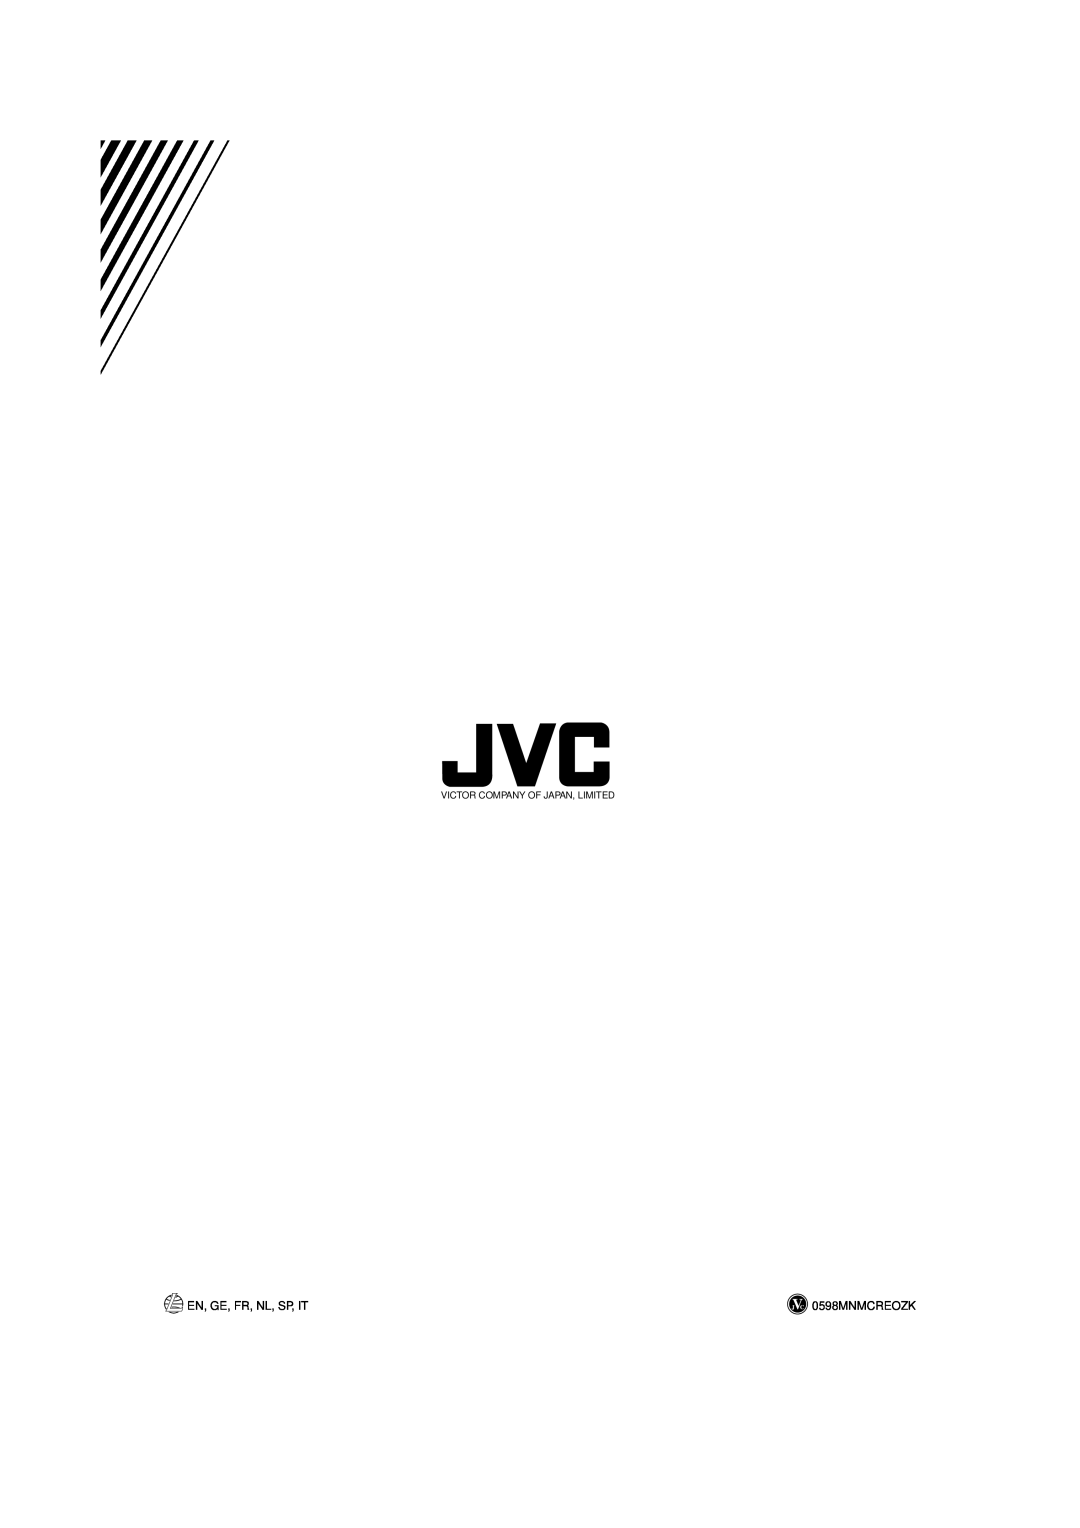 JVC UX-MD9000R manual En, Ge, Fr, Nl, Sp, It, 0598MNMCREOZK, Victor Company Of Japan, Limited 